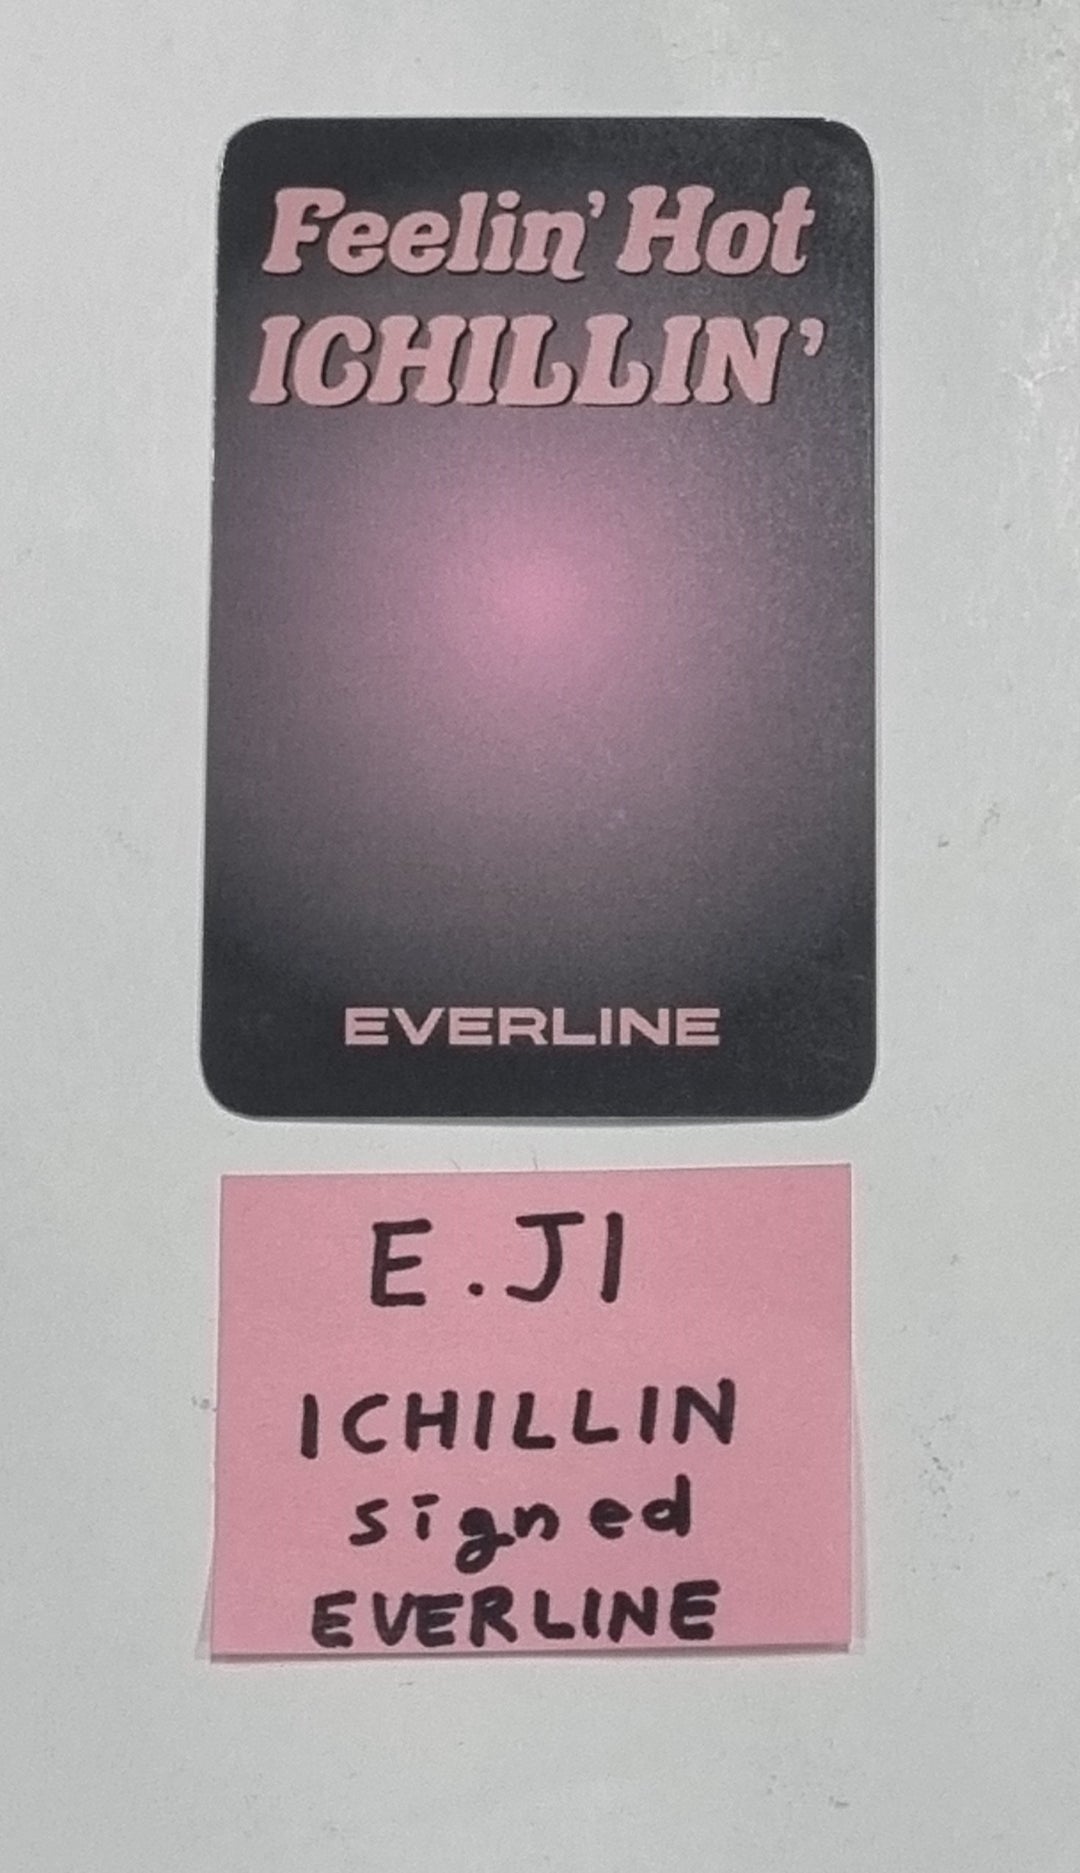 E.JI (Of ICHILLIN) "FEELIN' HOT" - Hand Autographed(Signed) Photocard [24.4.15]